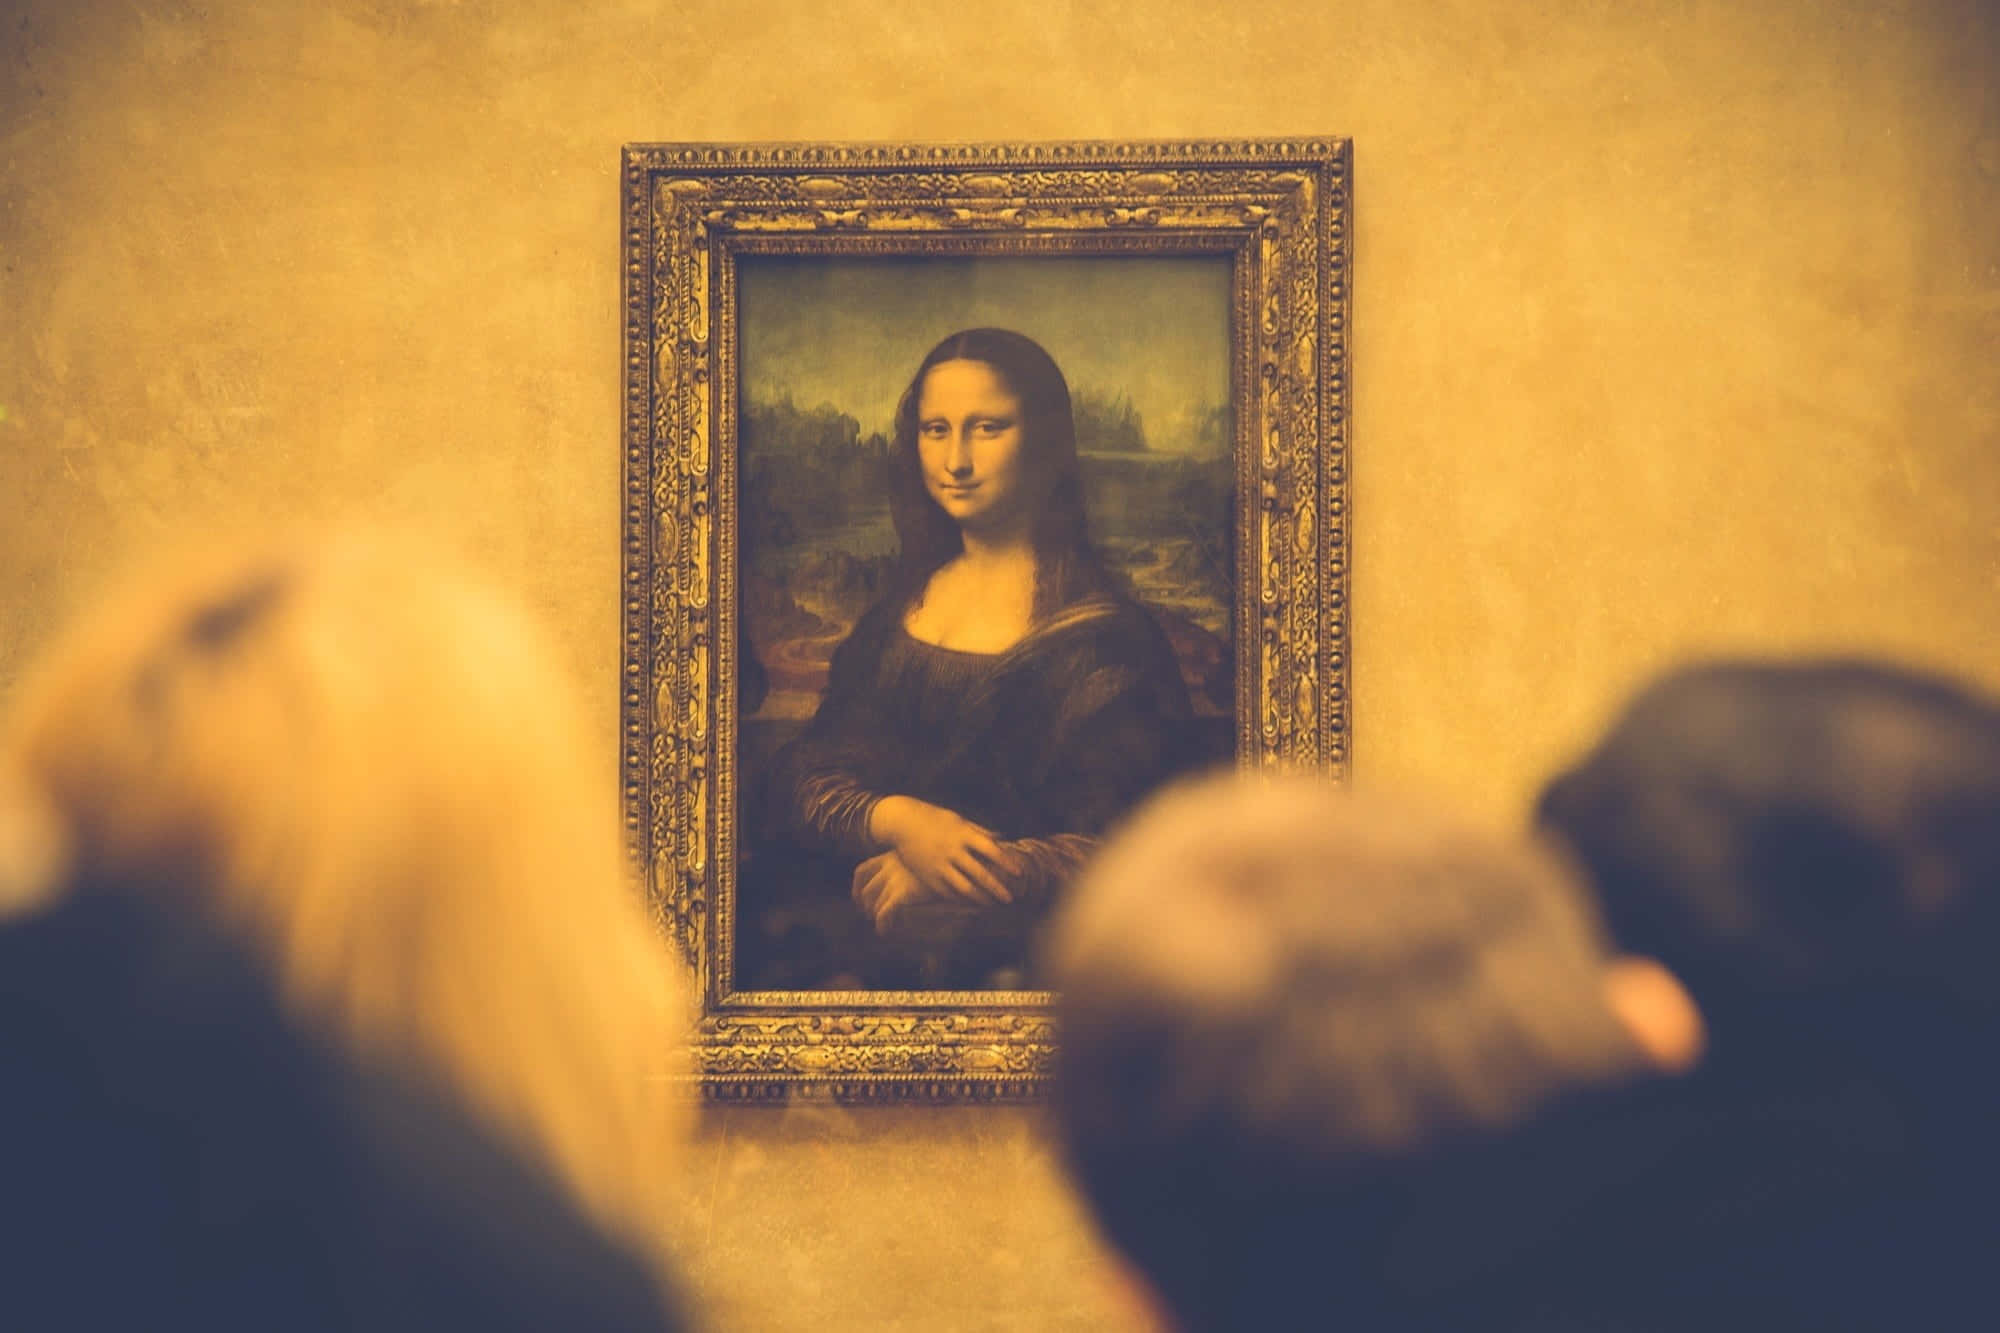 The Iconic Mona Lisa Painting by Leonardo da Vinci